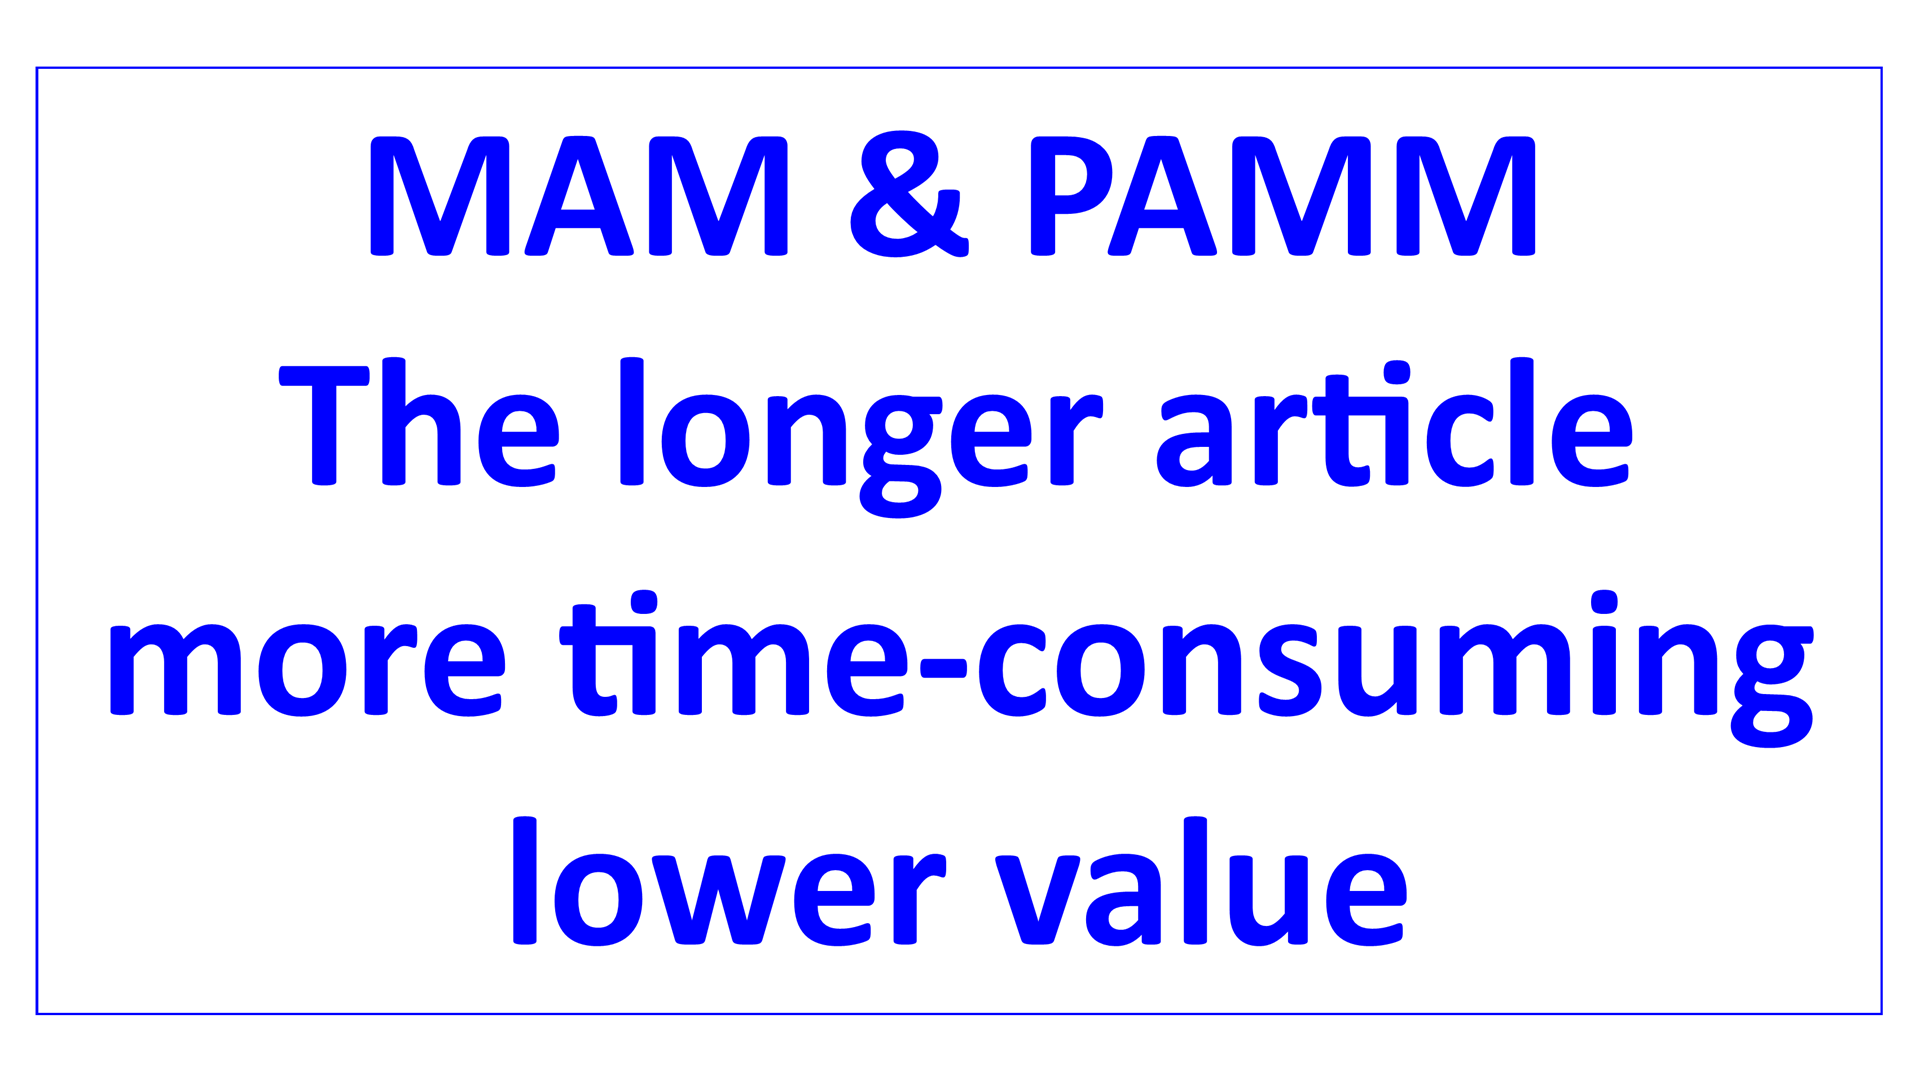 longer article more time-consuming lower value en